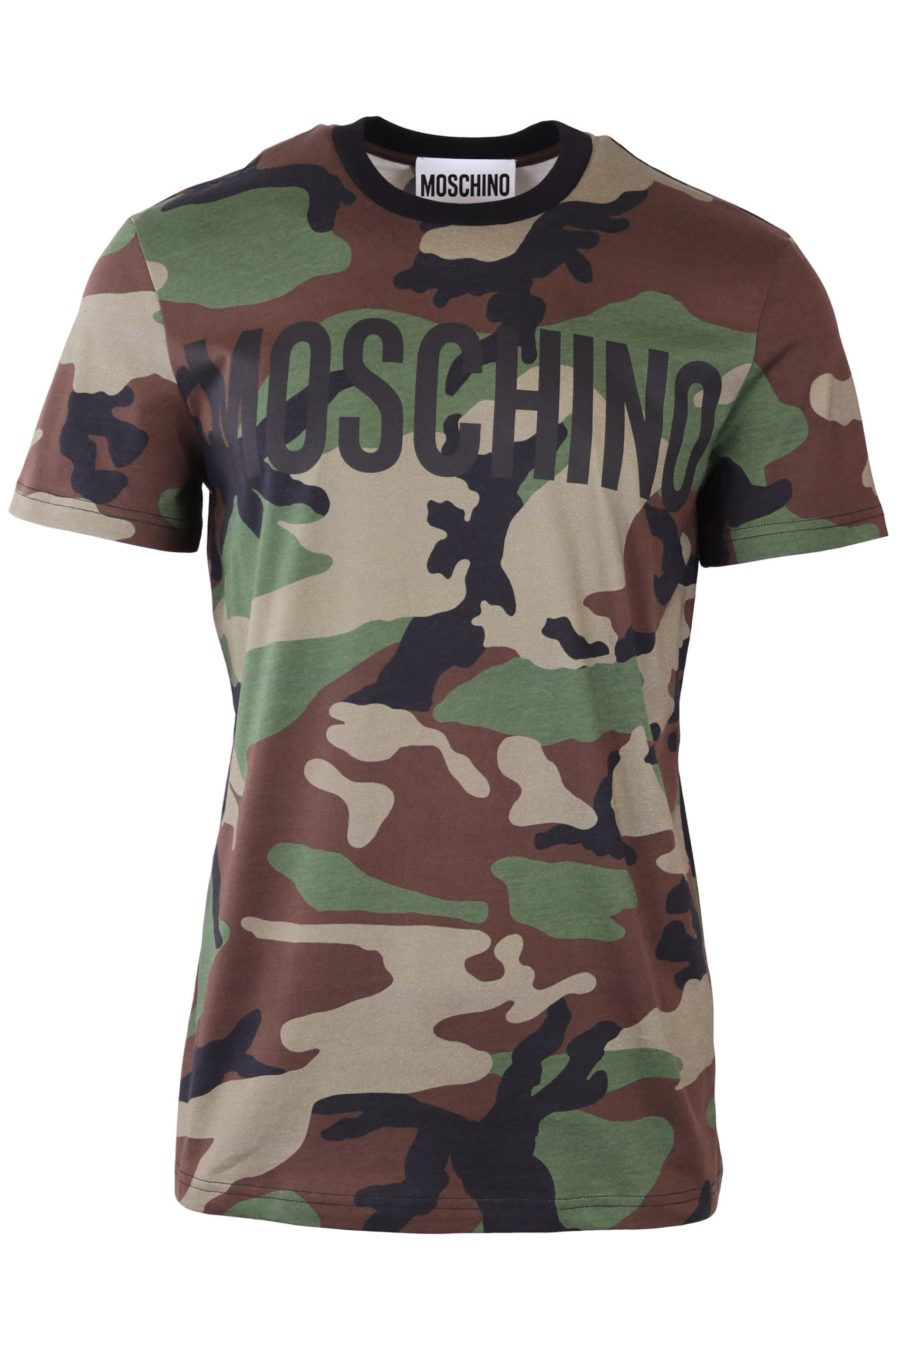 Camiseta Moschino Couture militar con logo - IMG 6538 scaled